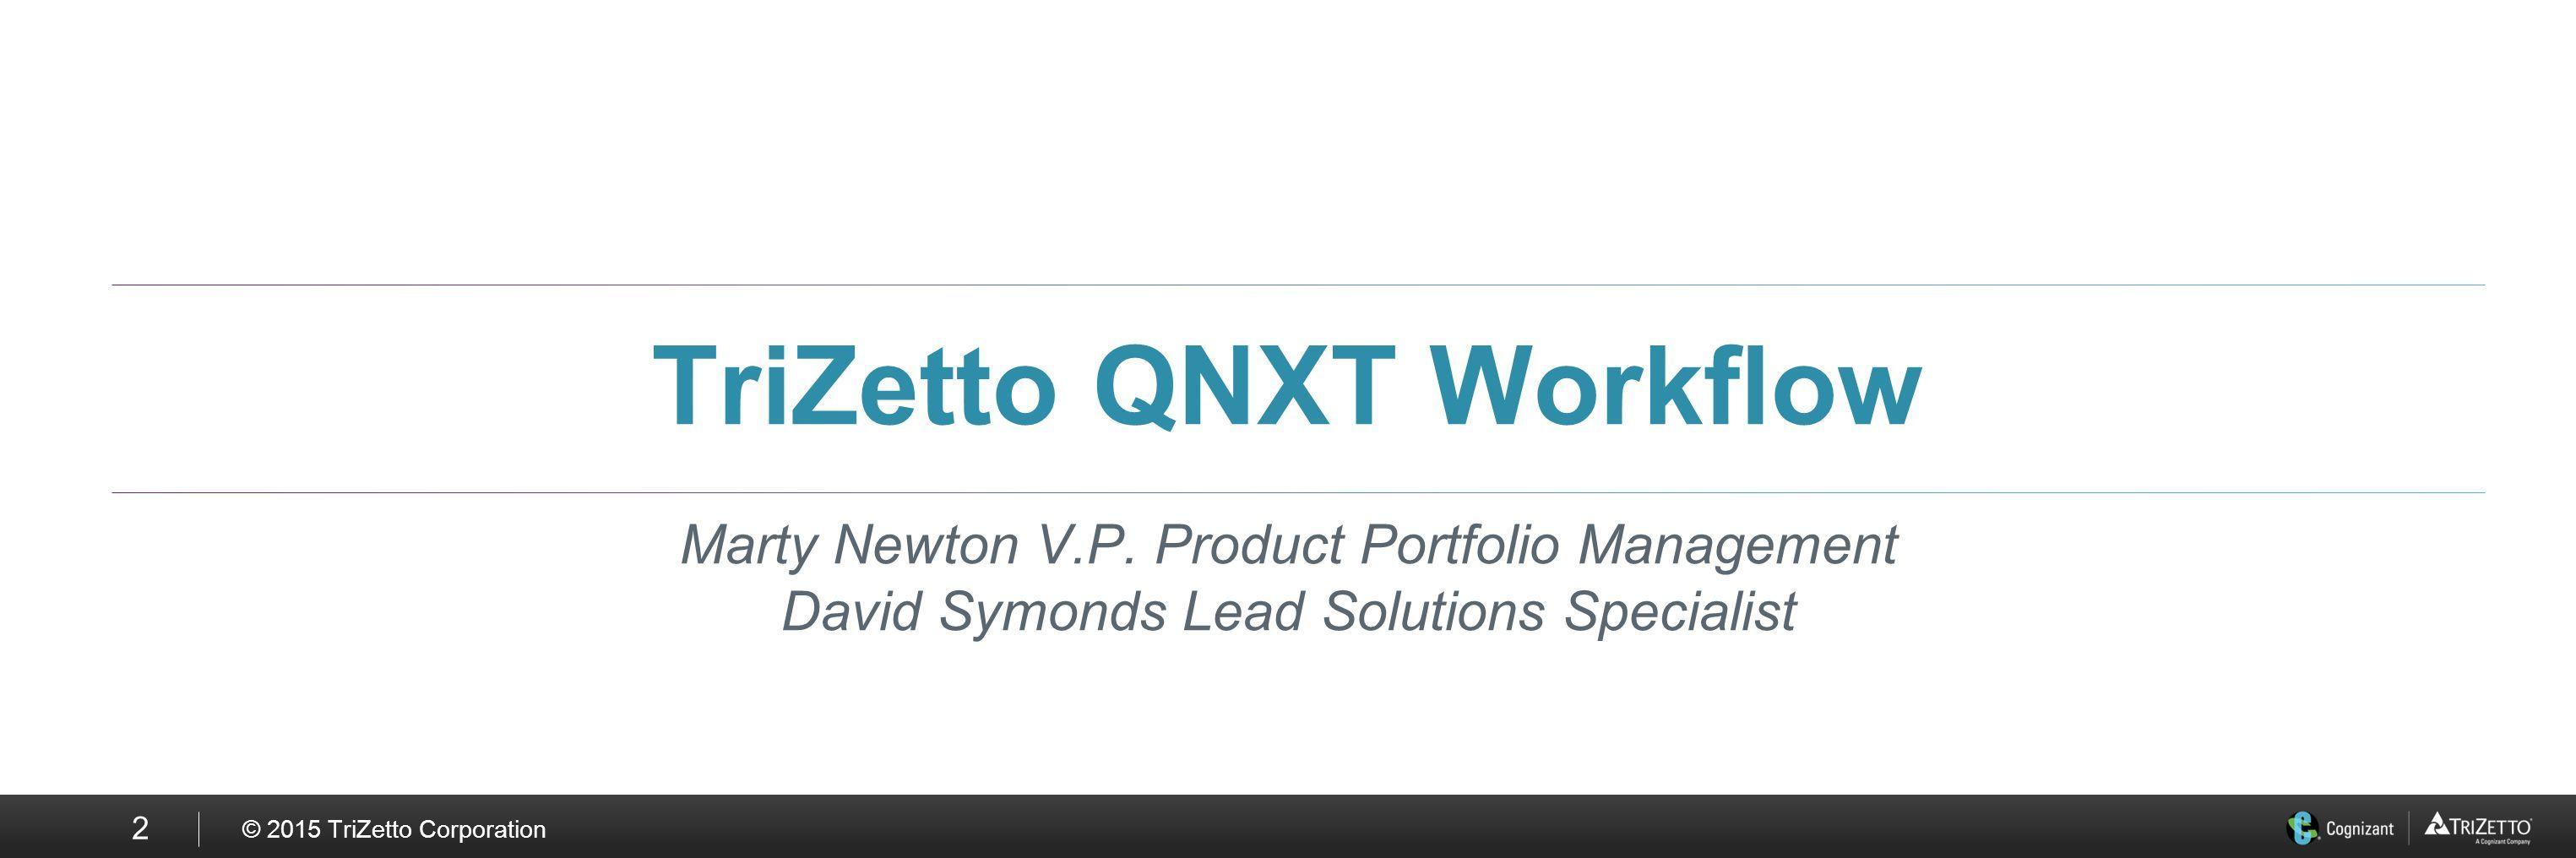 Qnxt Logo - TriZetto QNXT Workflow - ppt video online download